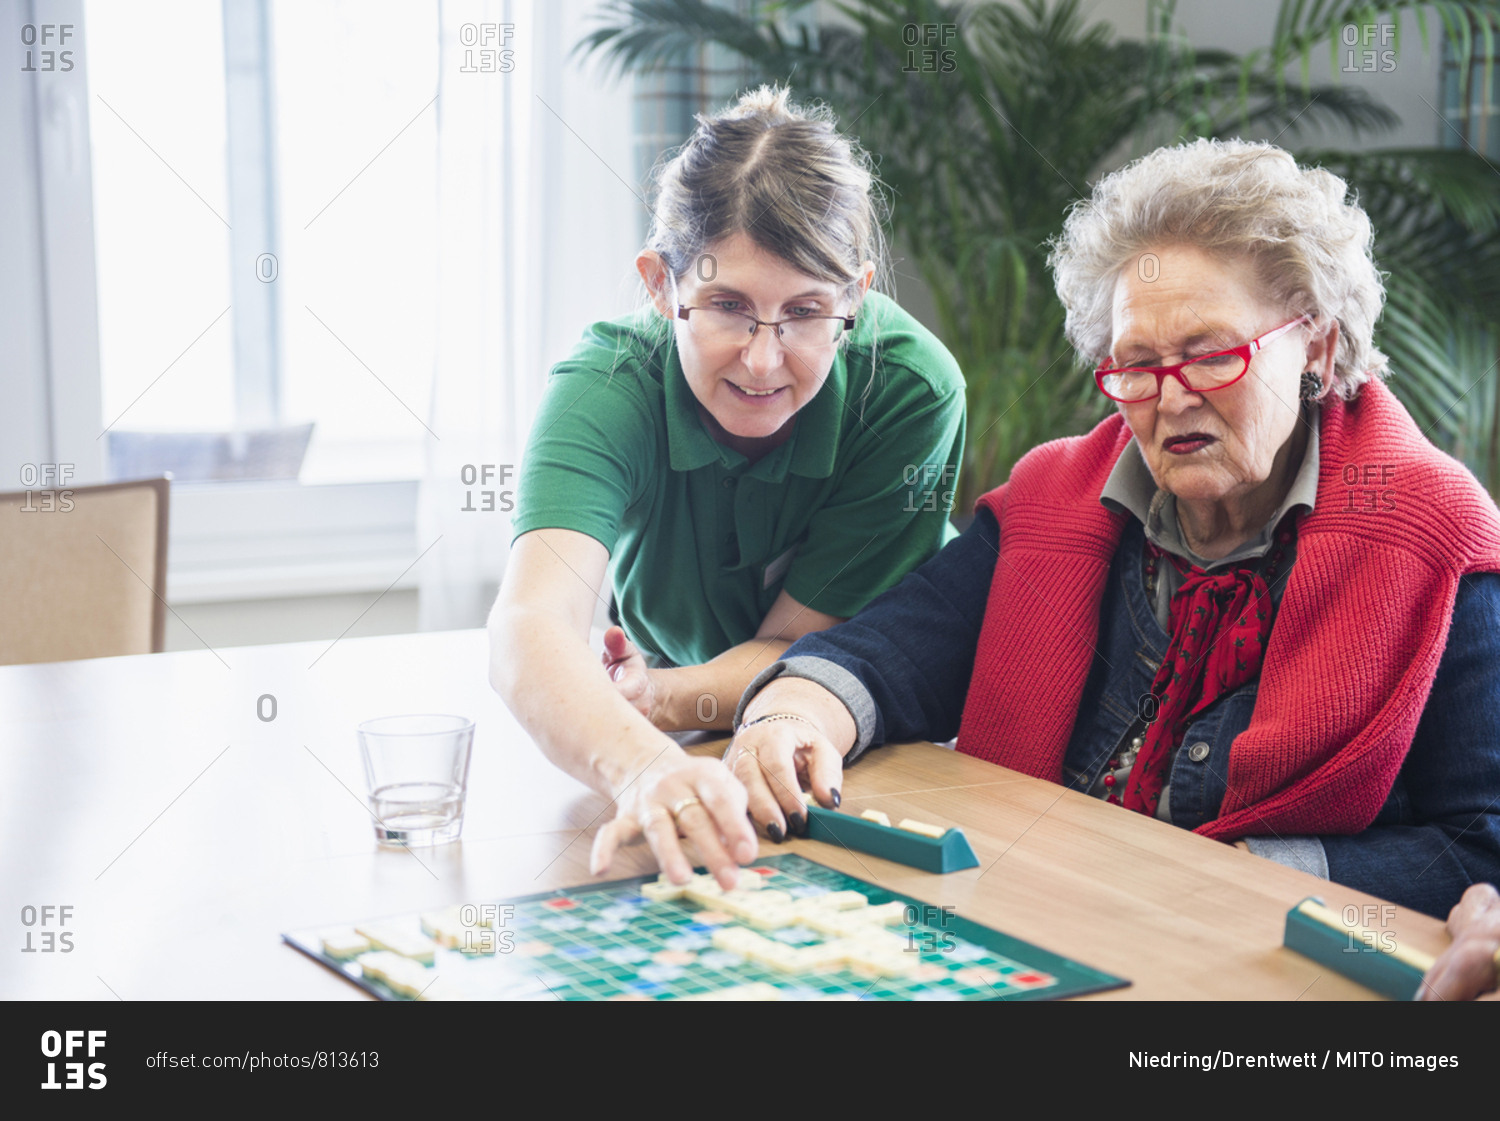 Nursing staff assisting senior woman playing scrabble board game